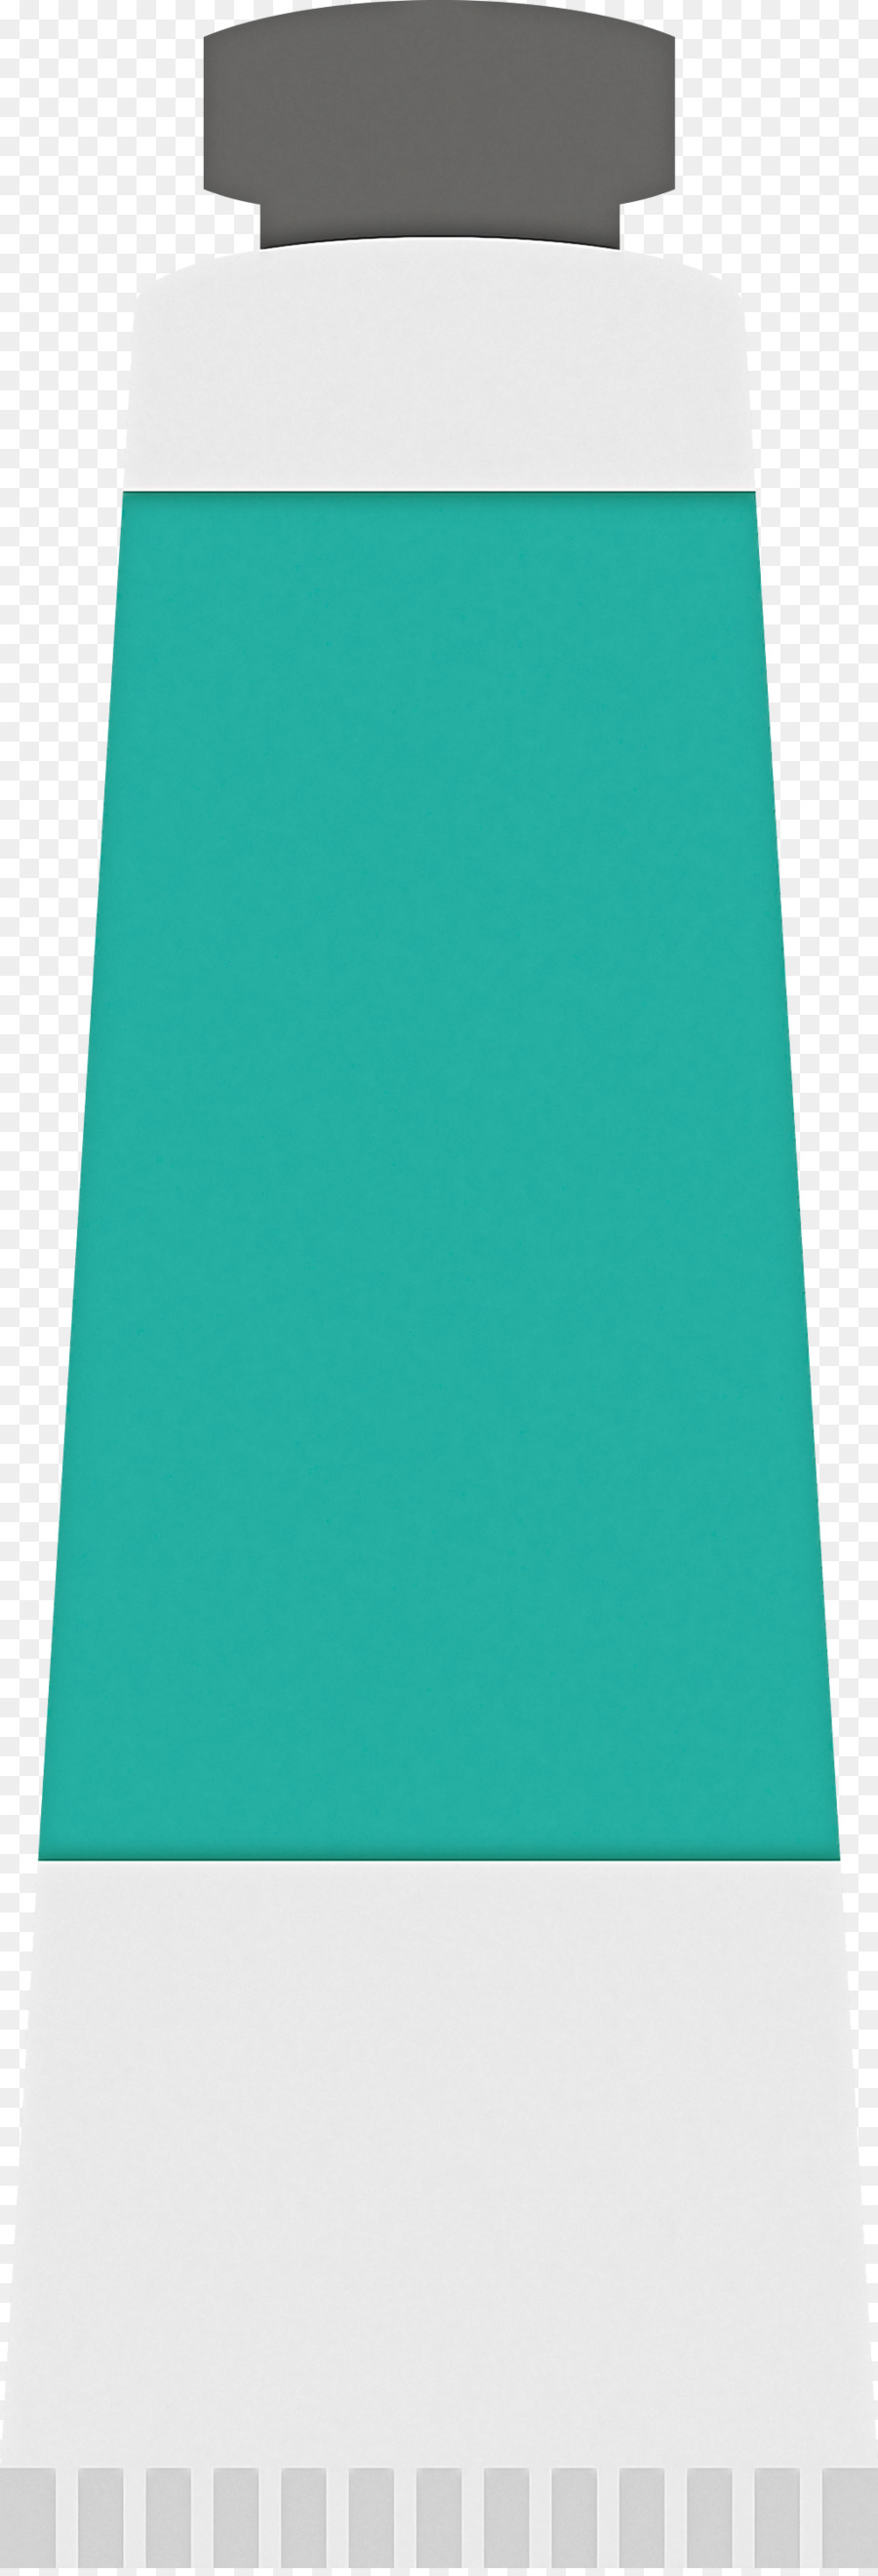 grünes aqua türkis blaugrün - 